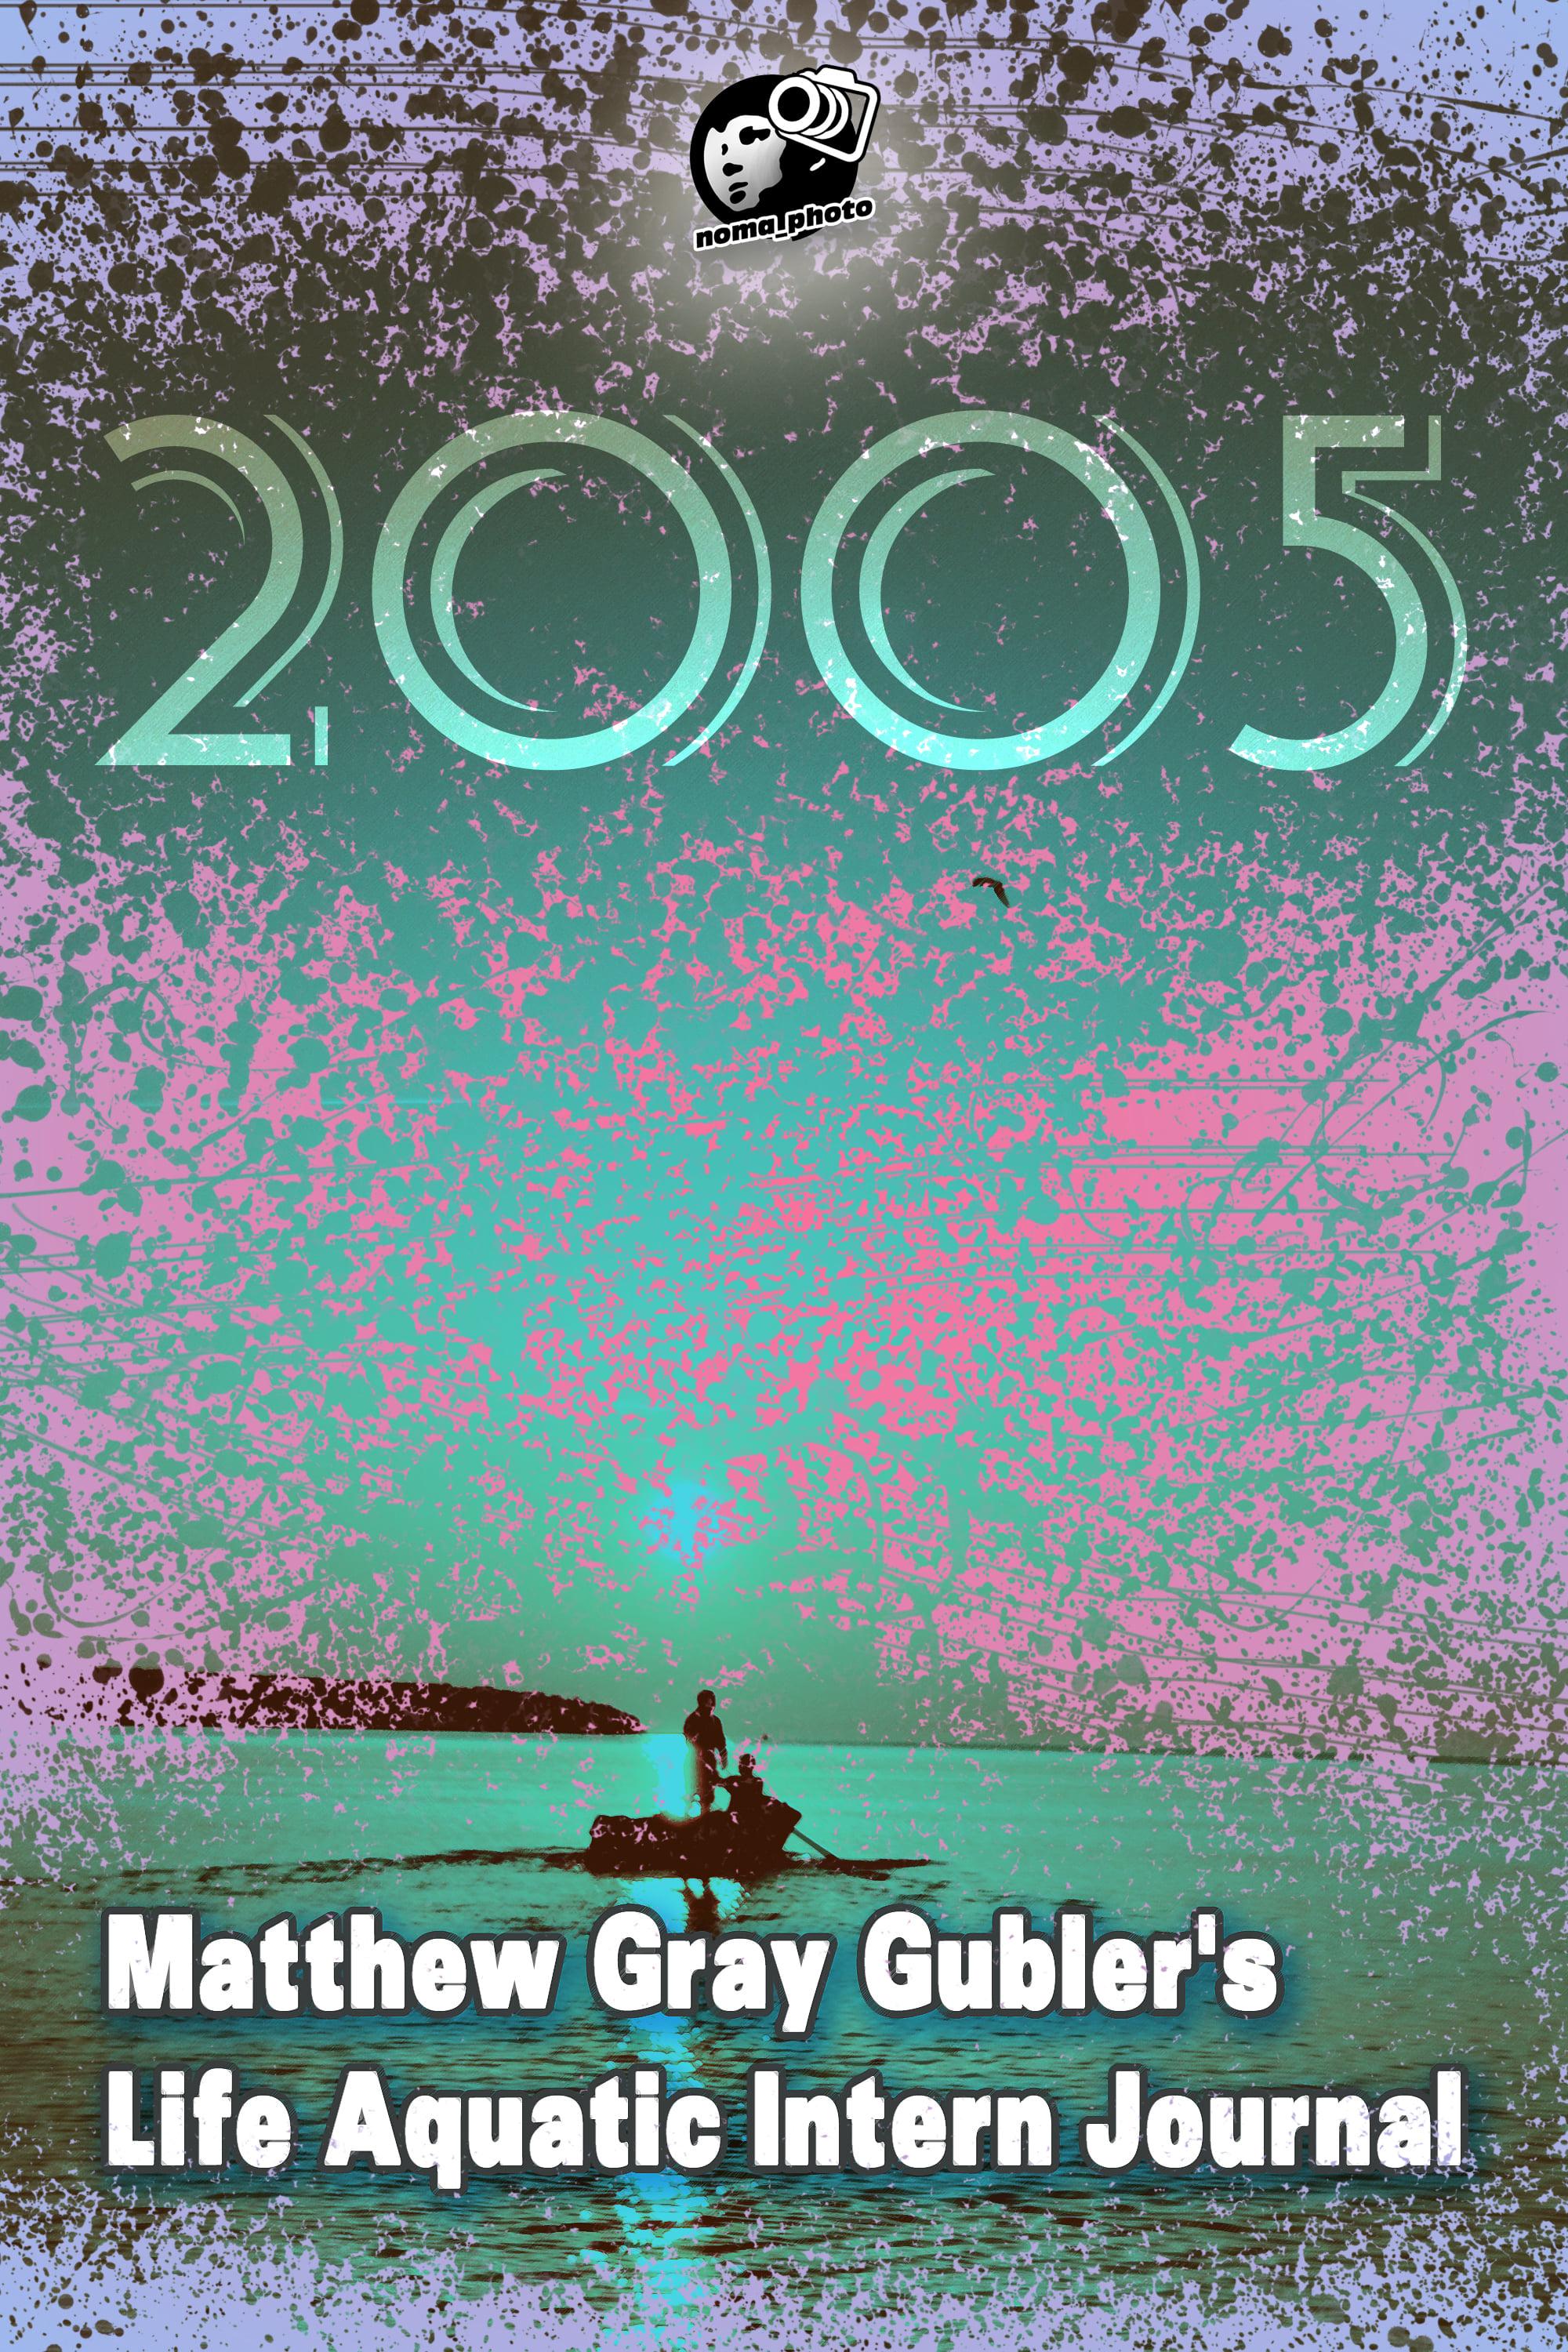 Matthew Gray Gubler's Life Aquatic Intern Journal poster